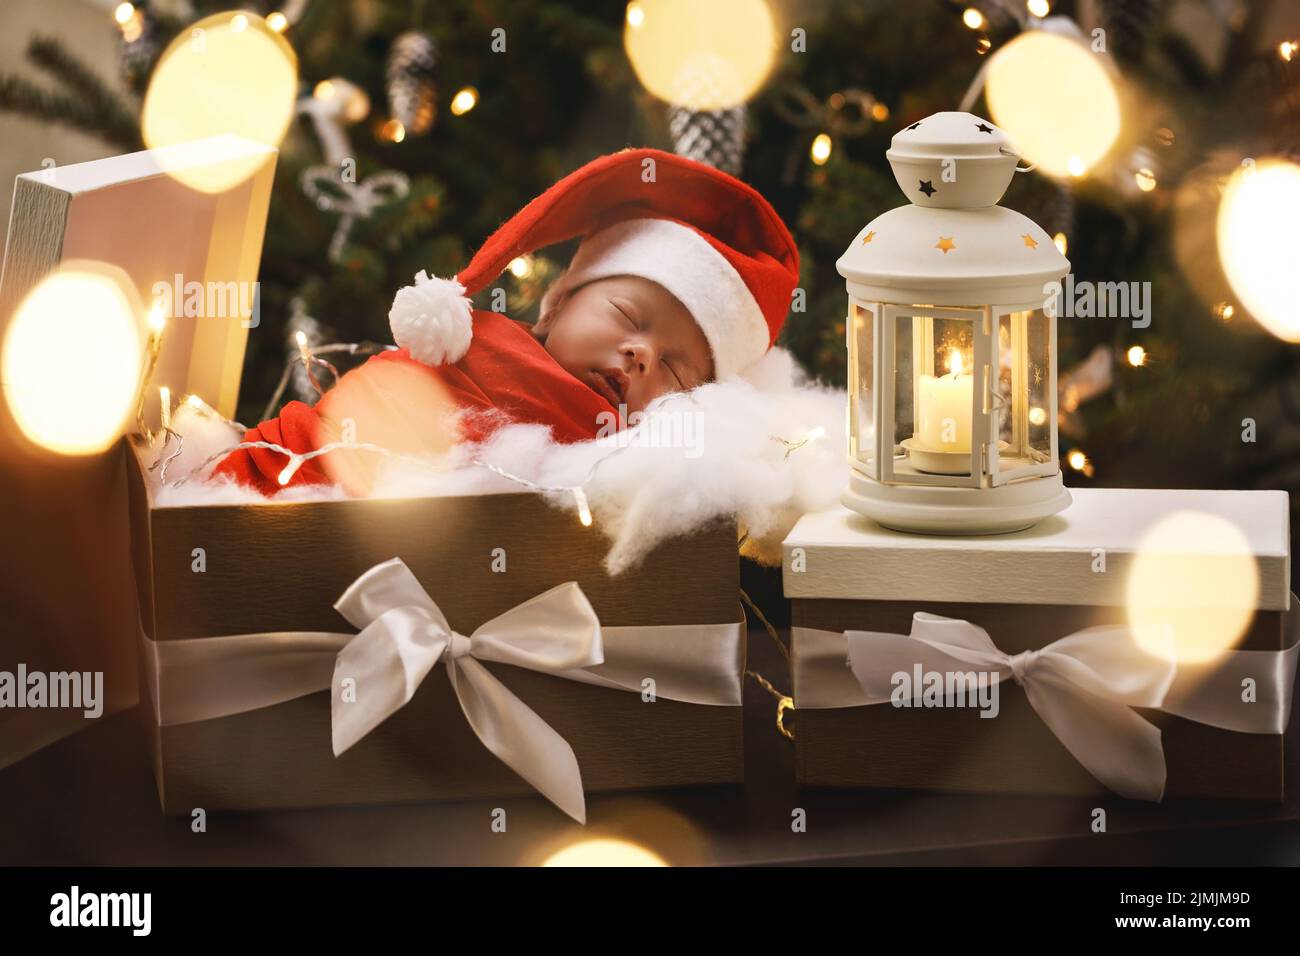 Cute newborn baby wearing Santa Claus hat is sleeping in the Christmas gift box Stock Photo